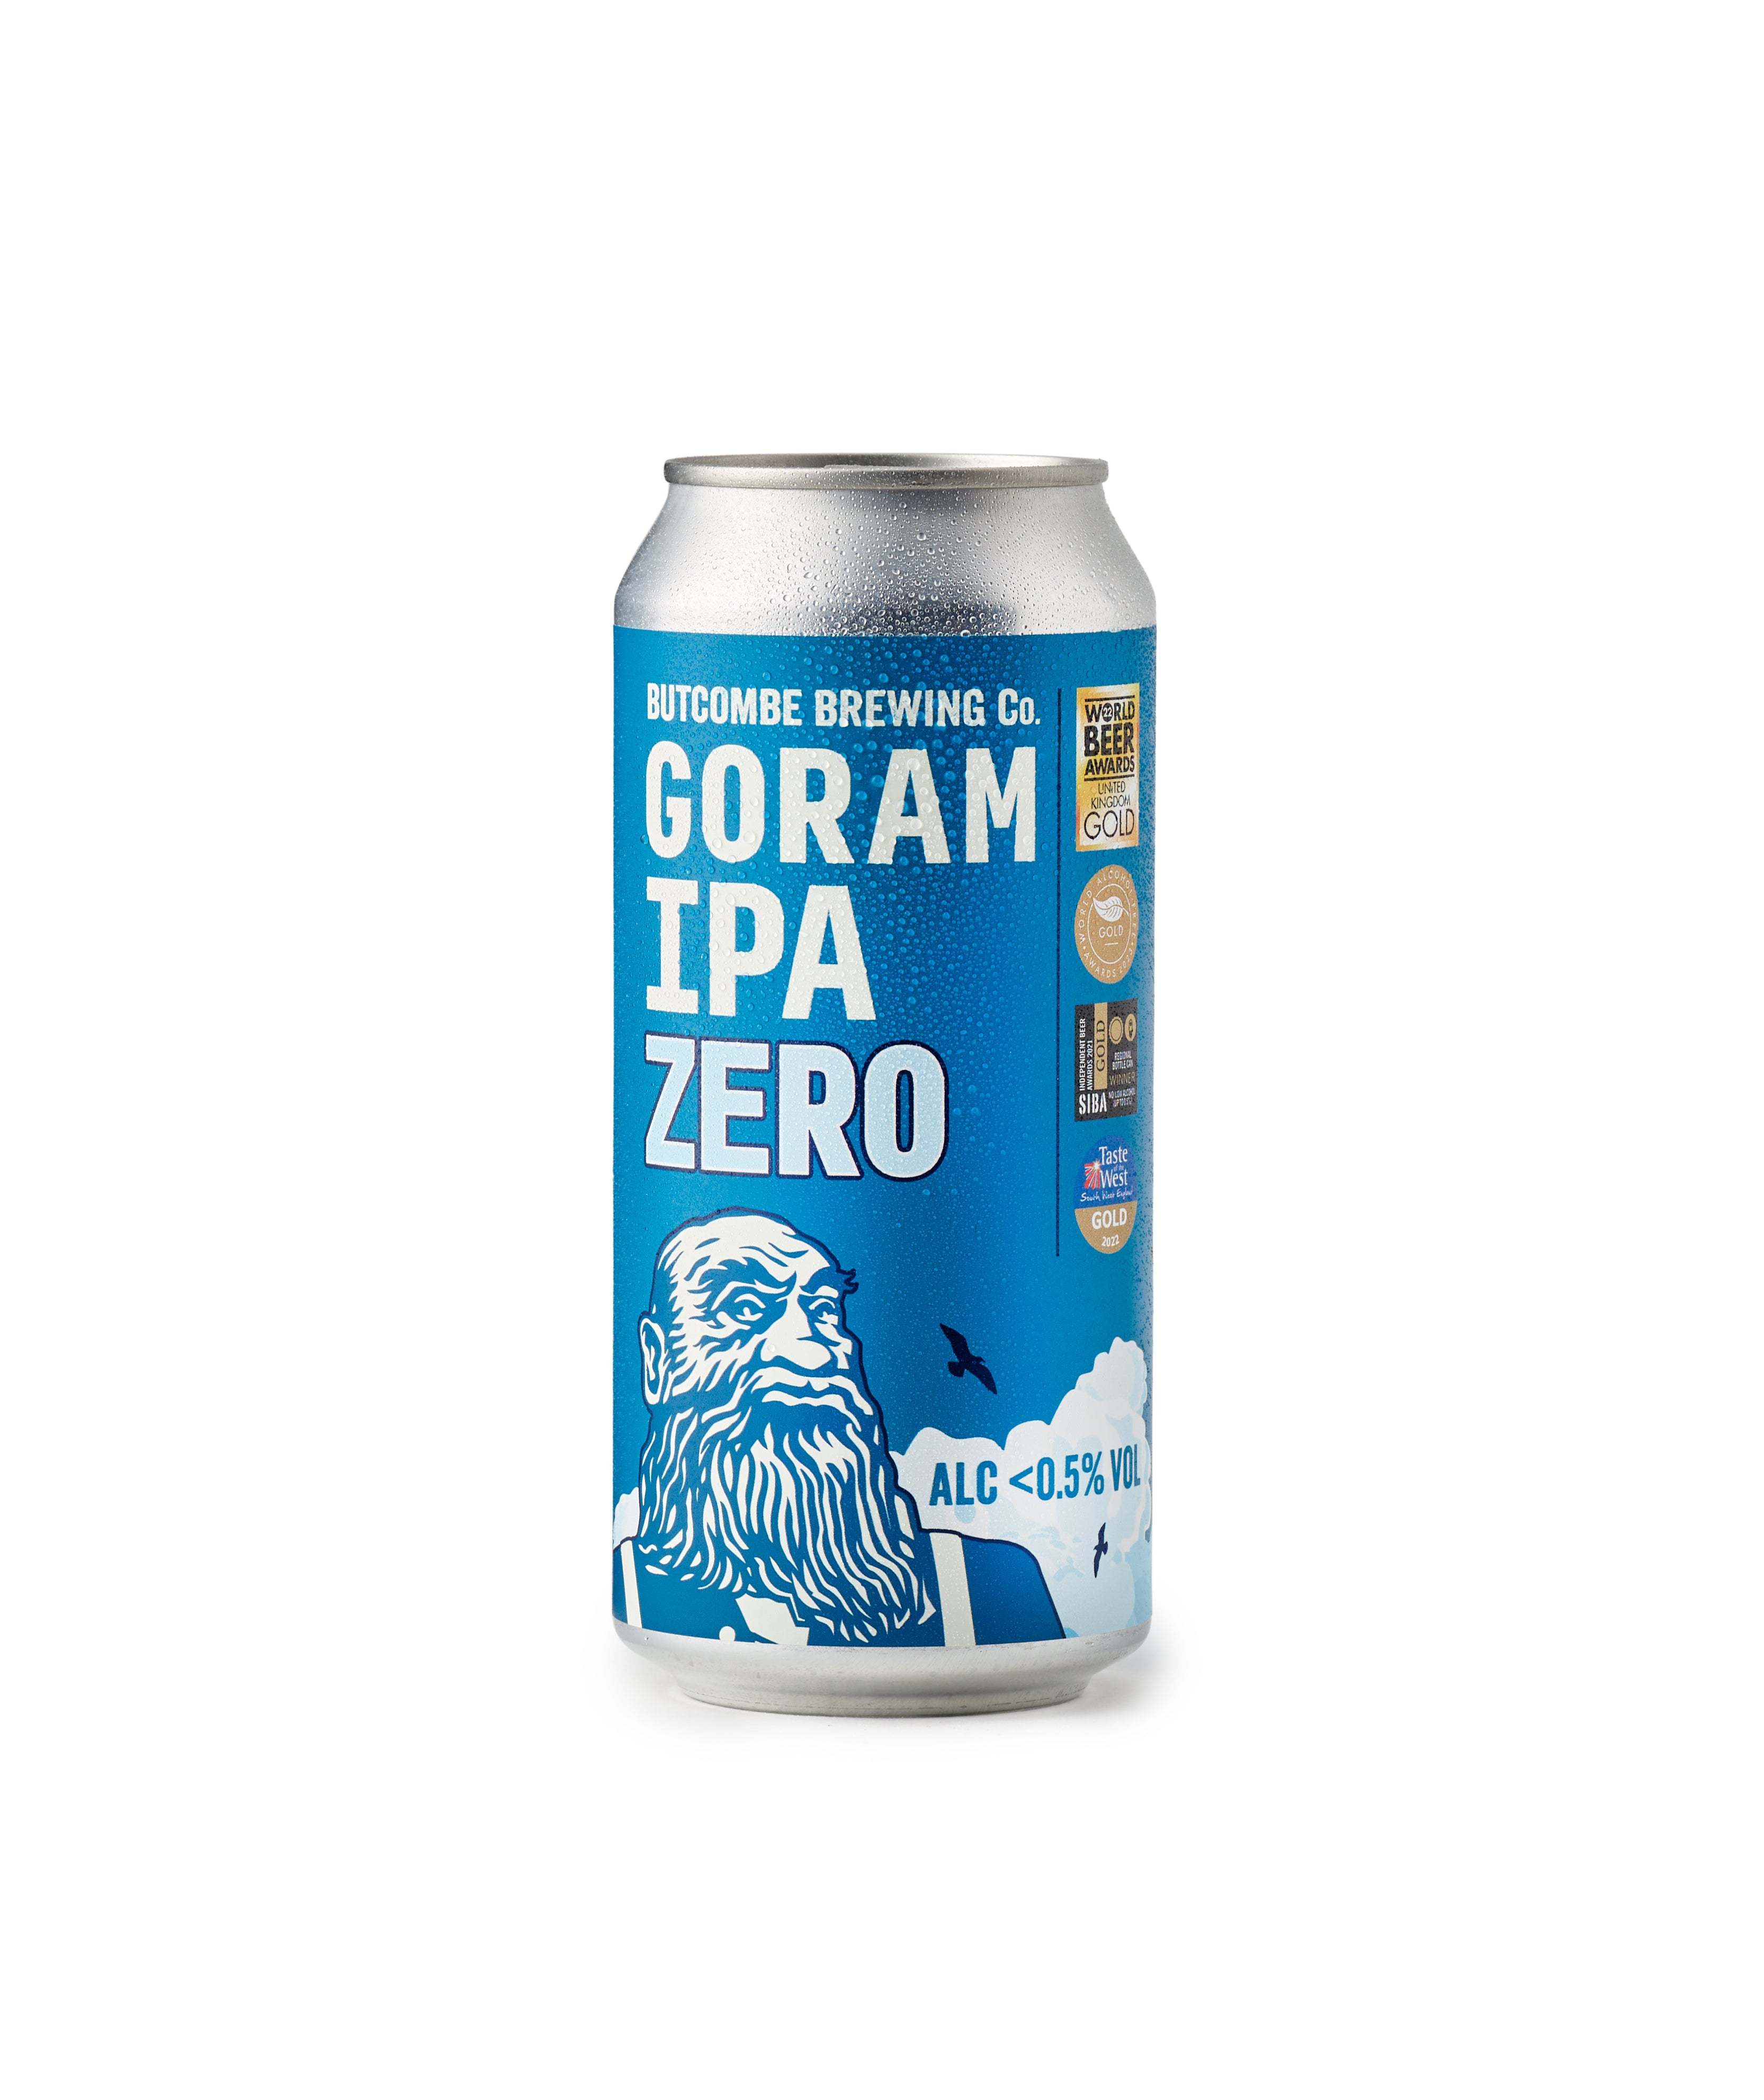 Goram IPA Zero Cans